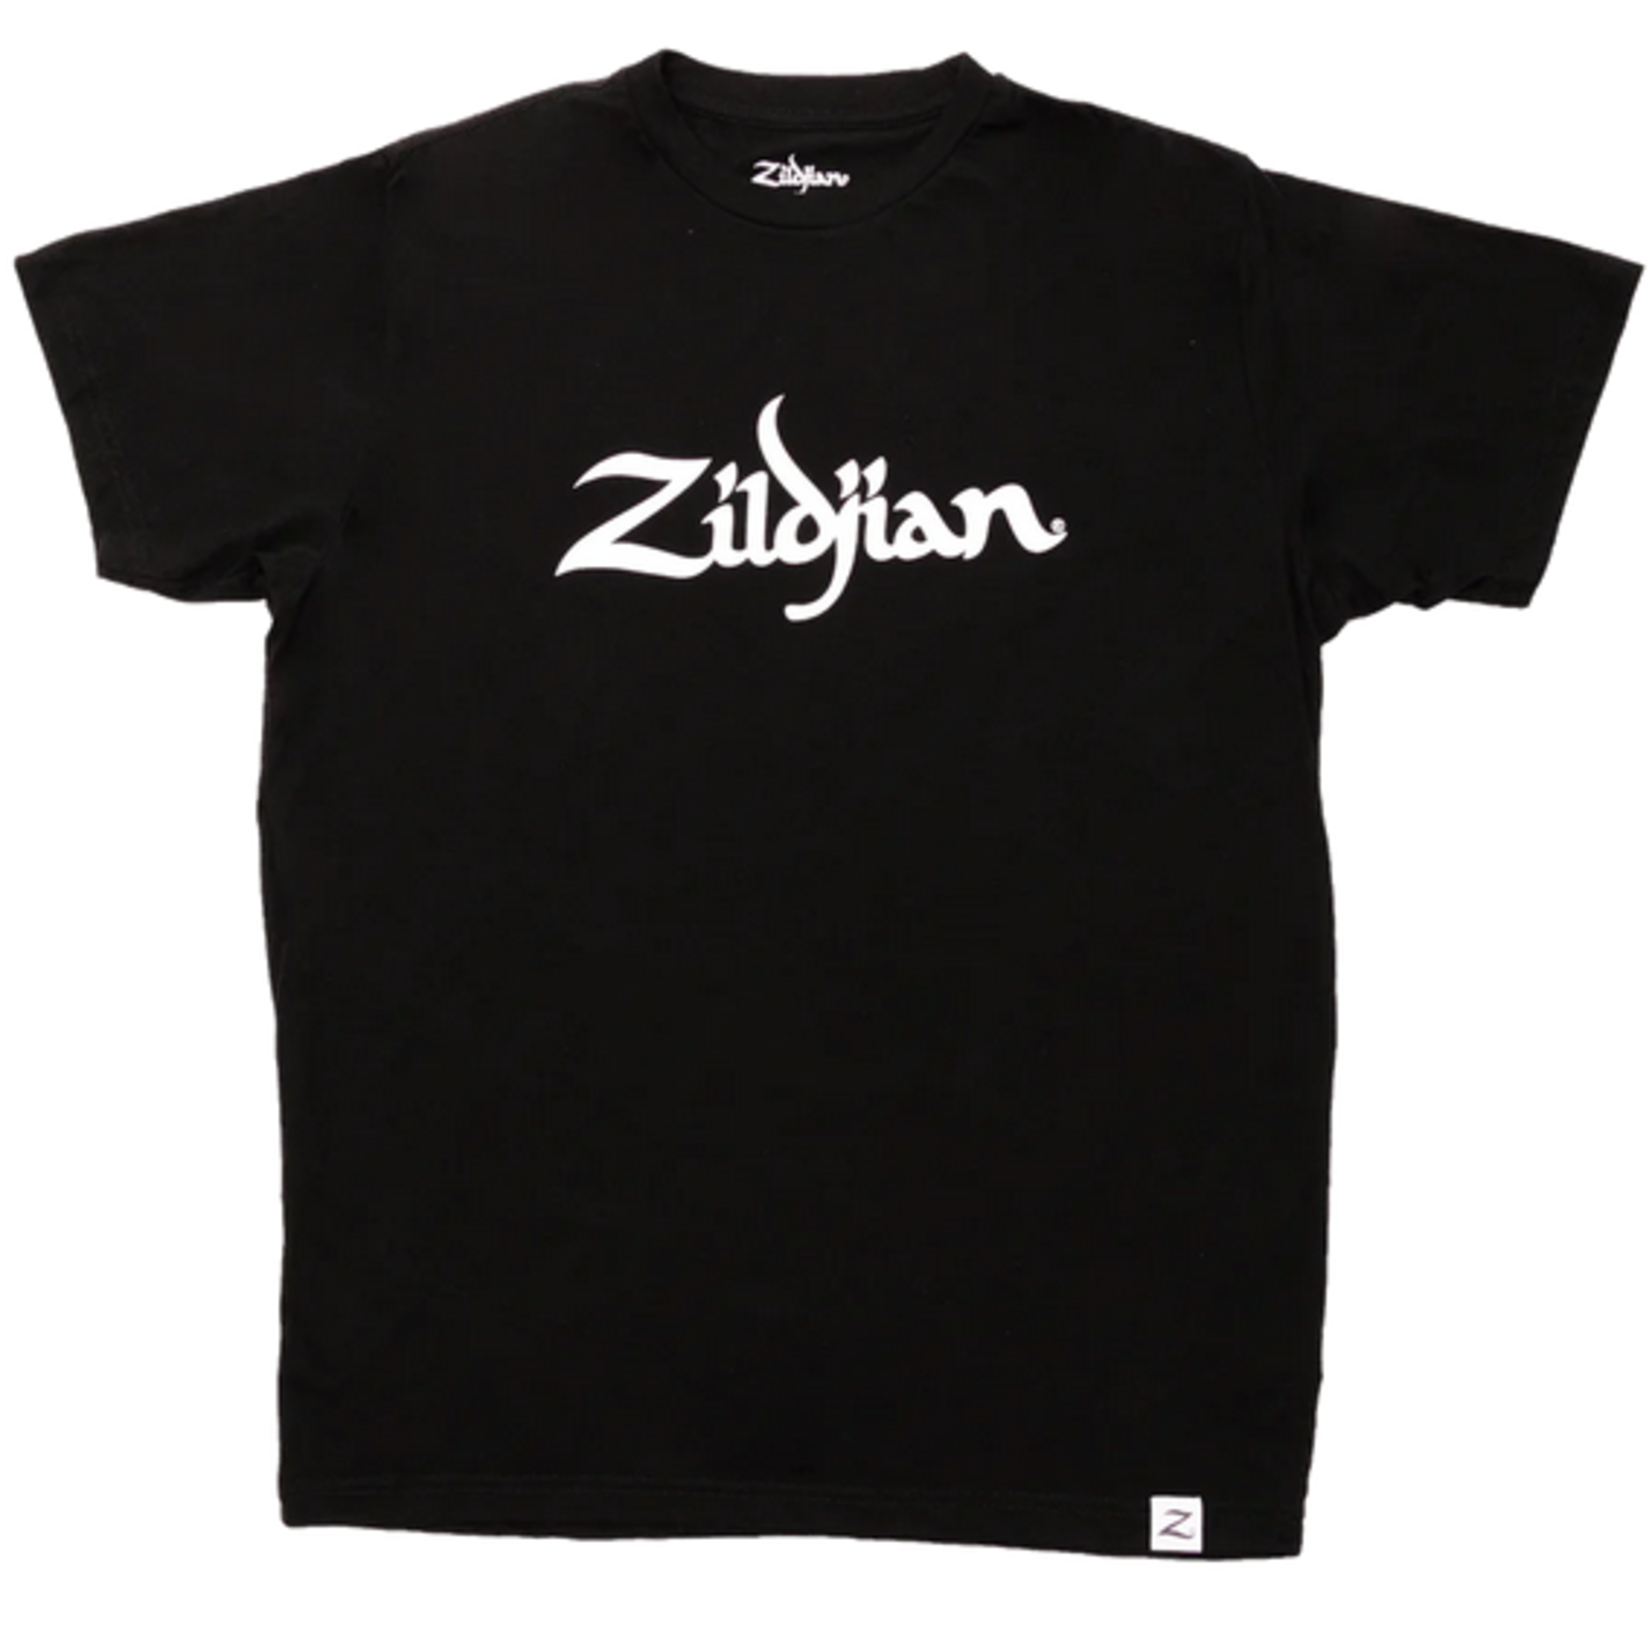 Zildjian Classic Logo Tee - Black (Large)